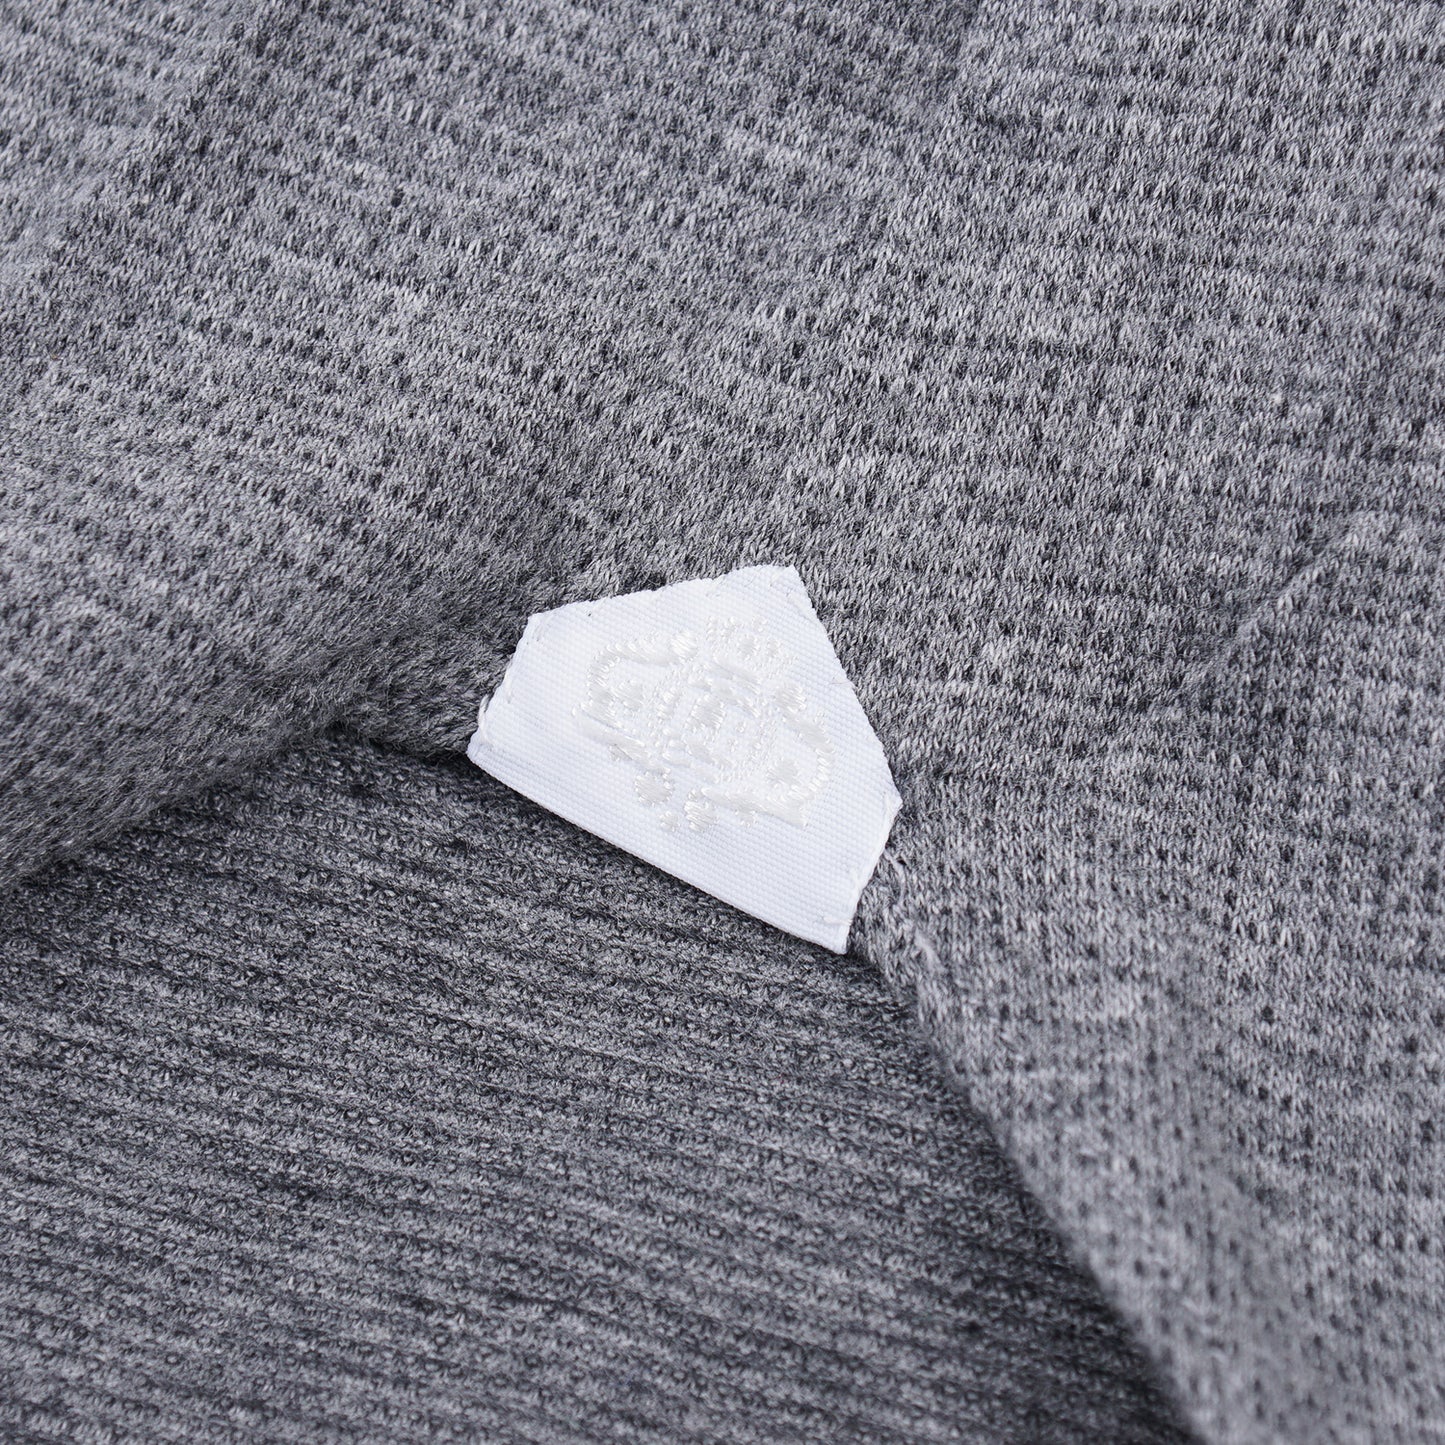 Luigi Borrelli Soft-Knit Cotton Shirt - Top Shelf Apparel